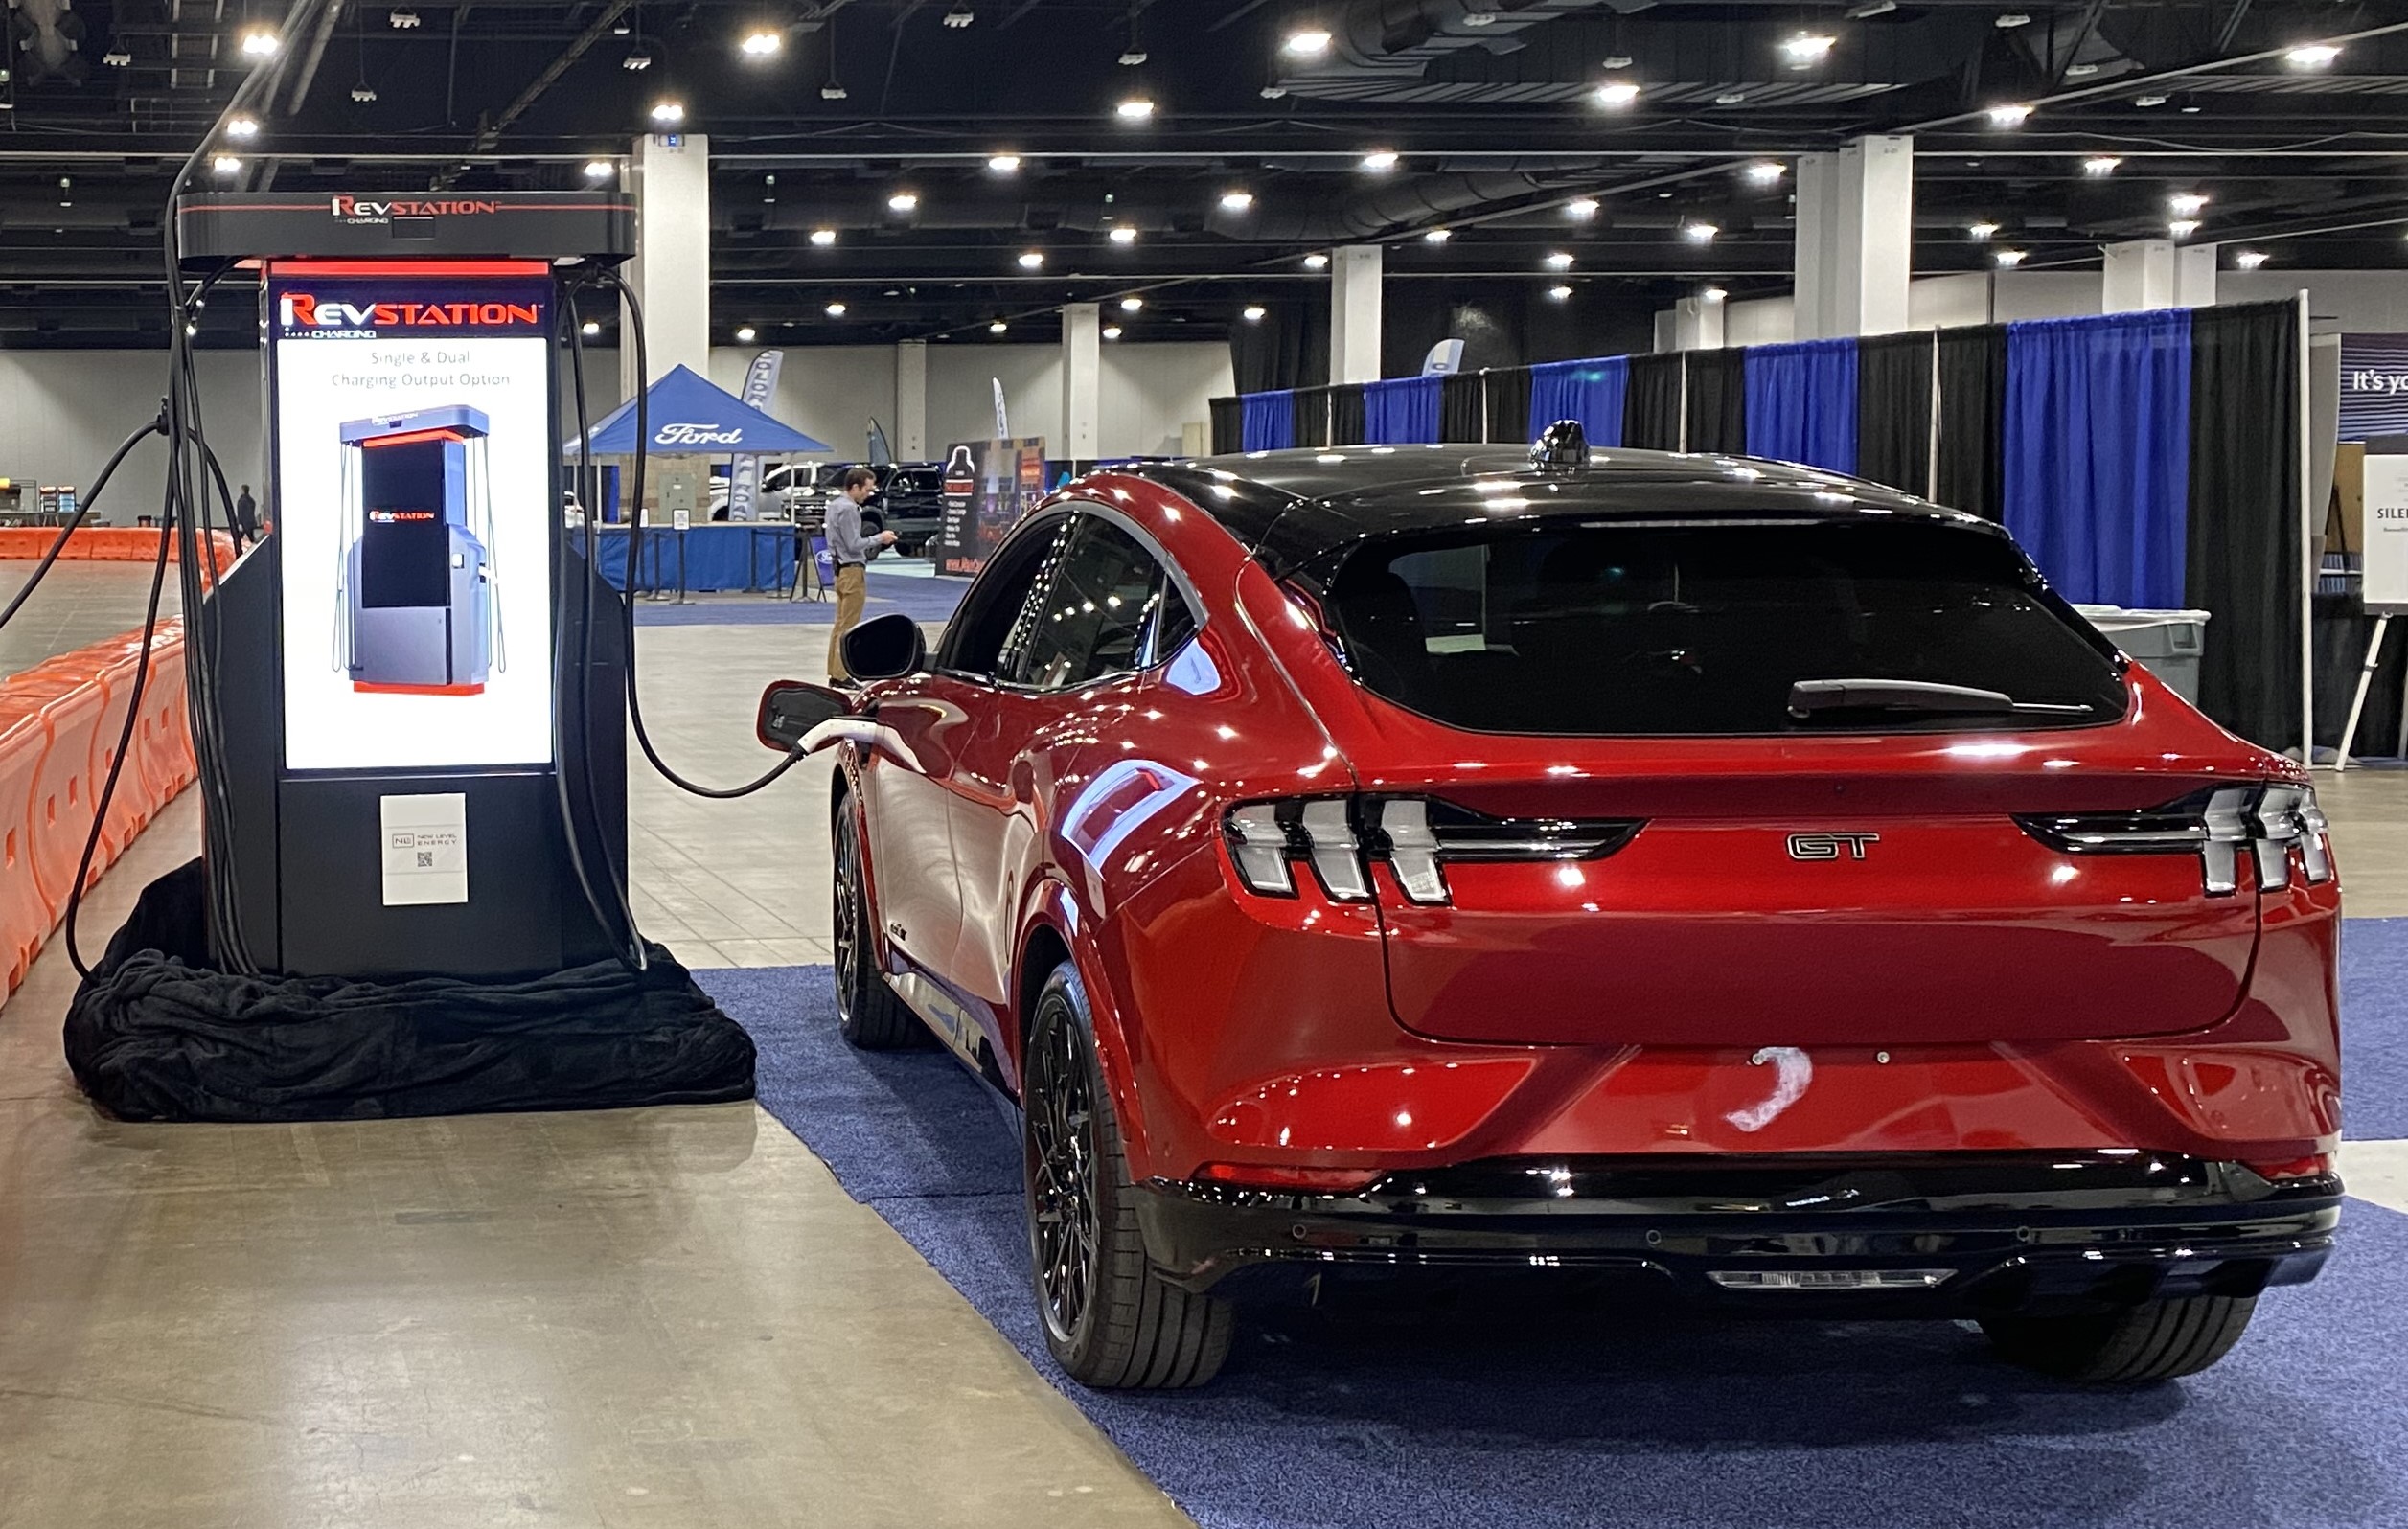 REVSTATION EV charging kiosk Launched at the Denver Auto Show 2023